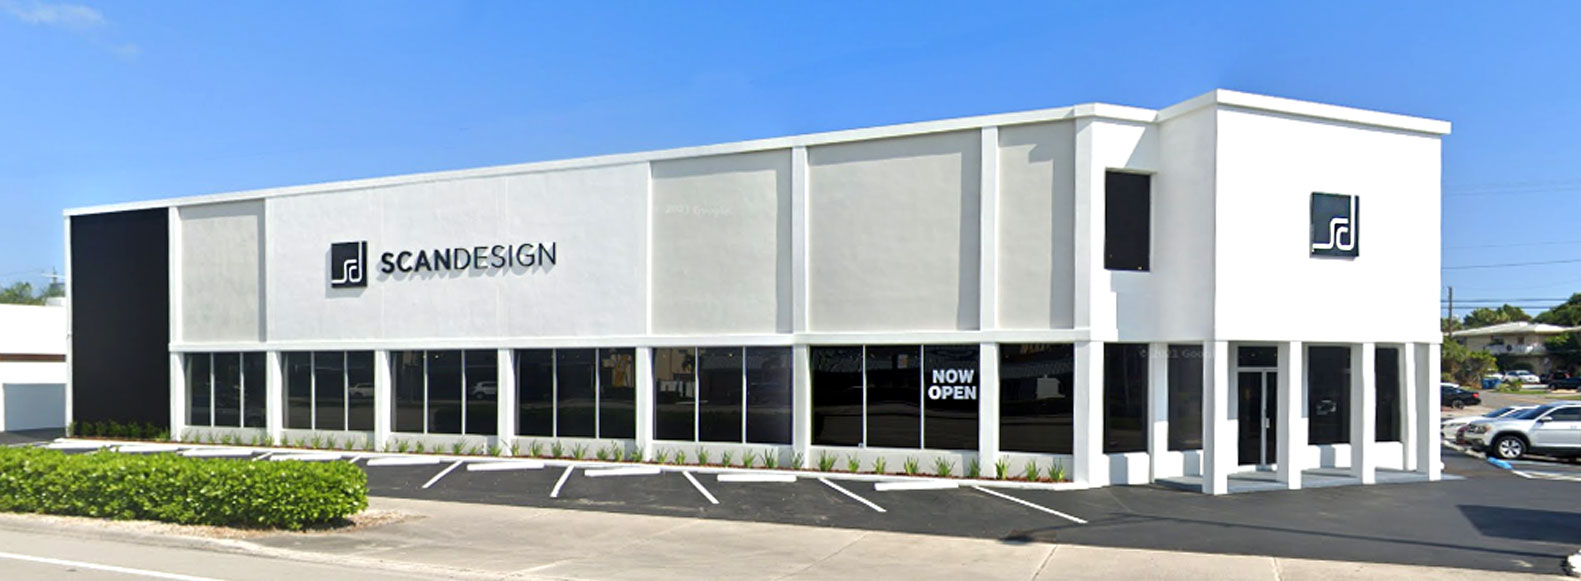 Scan Design - Ft. Lauderdale